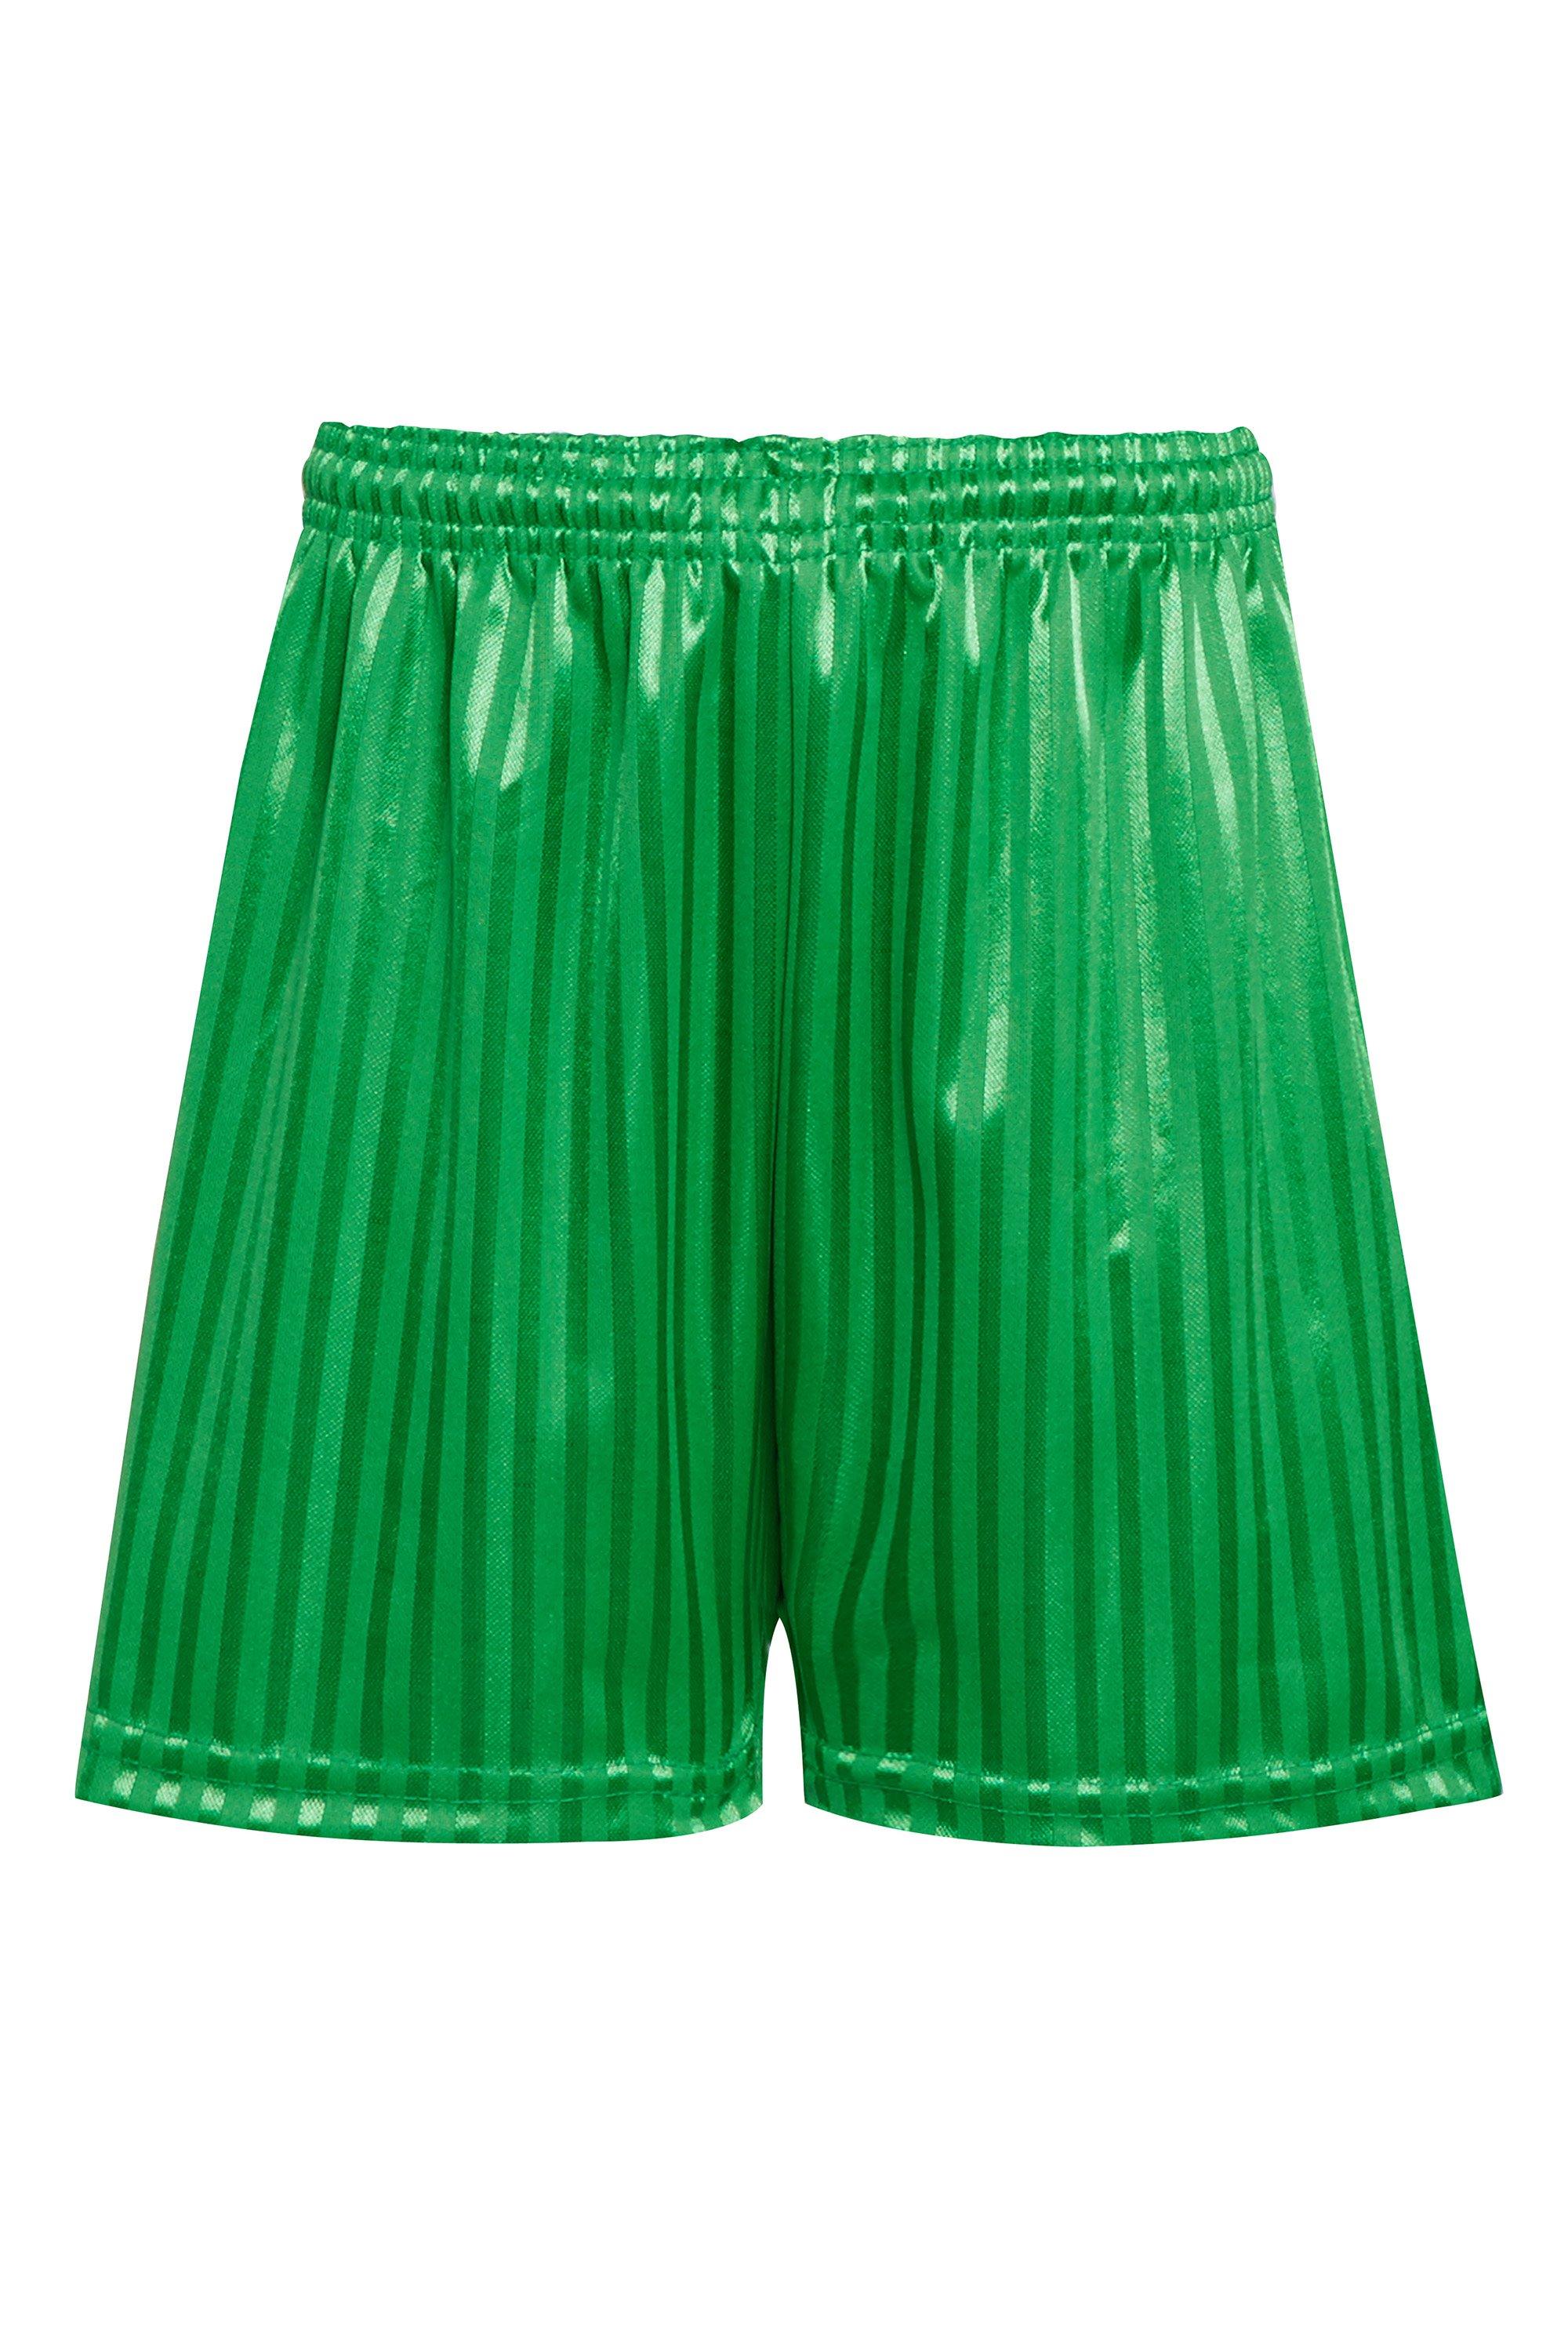 Спортивные шорты David Luke, зеленый спортивные шорты david luke синий